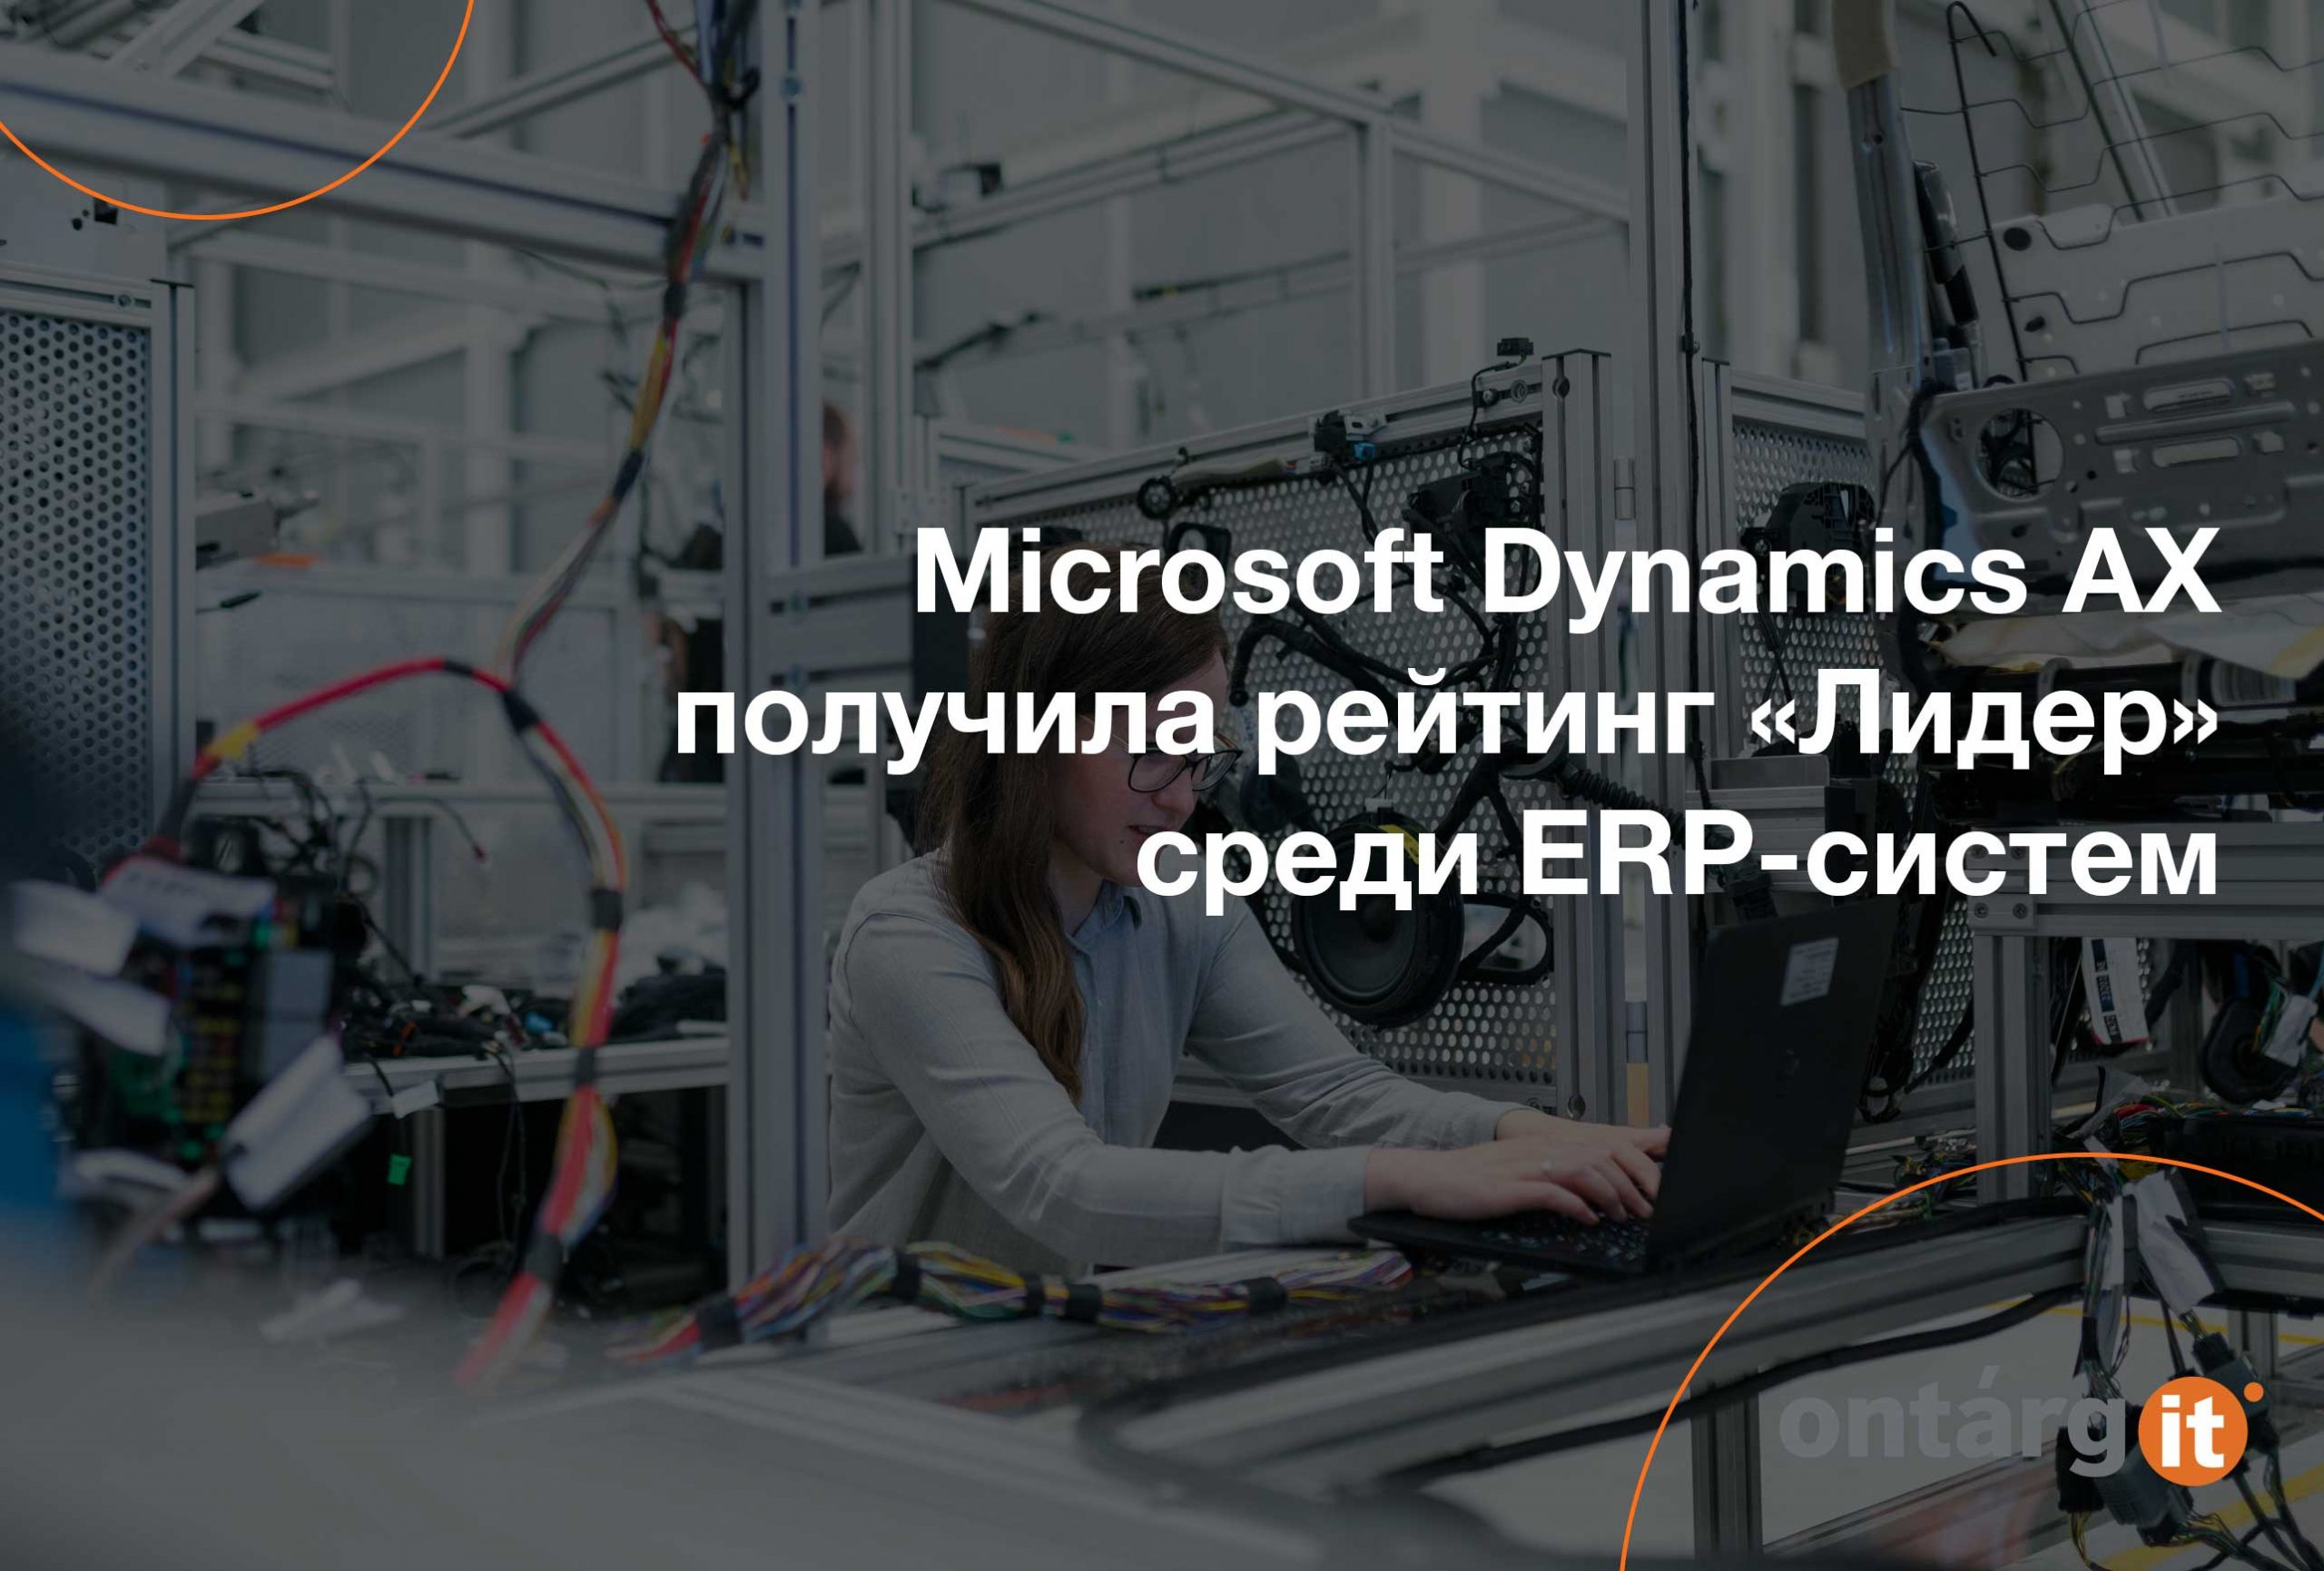 Microsoft Dynamics AX получила рейтинг «Лидер» среди ERP-систем